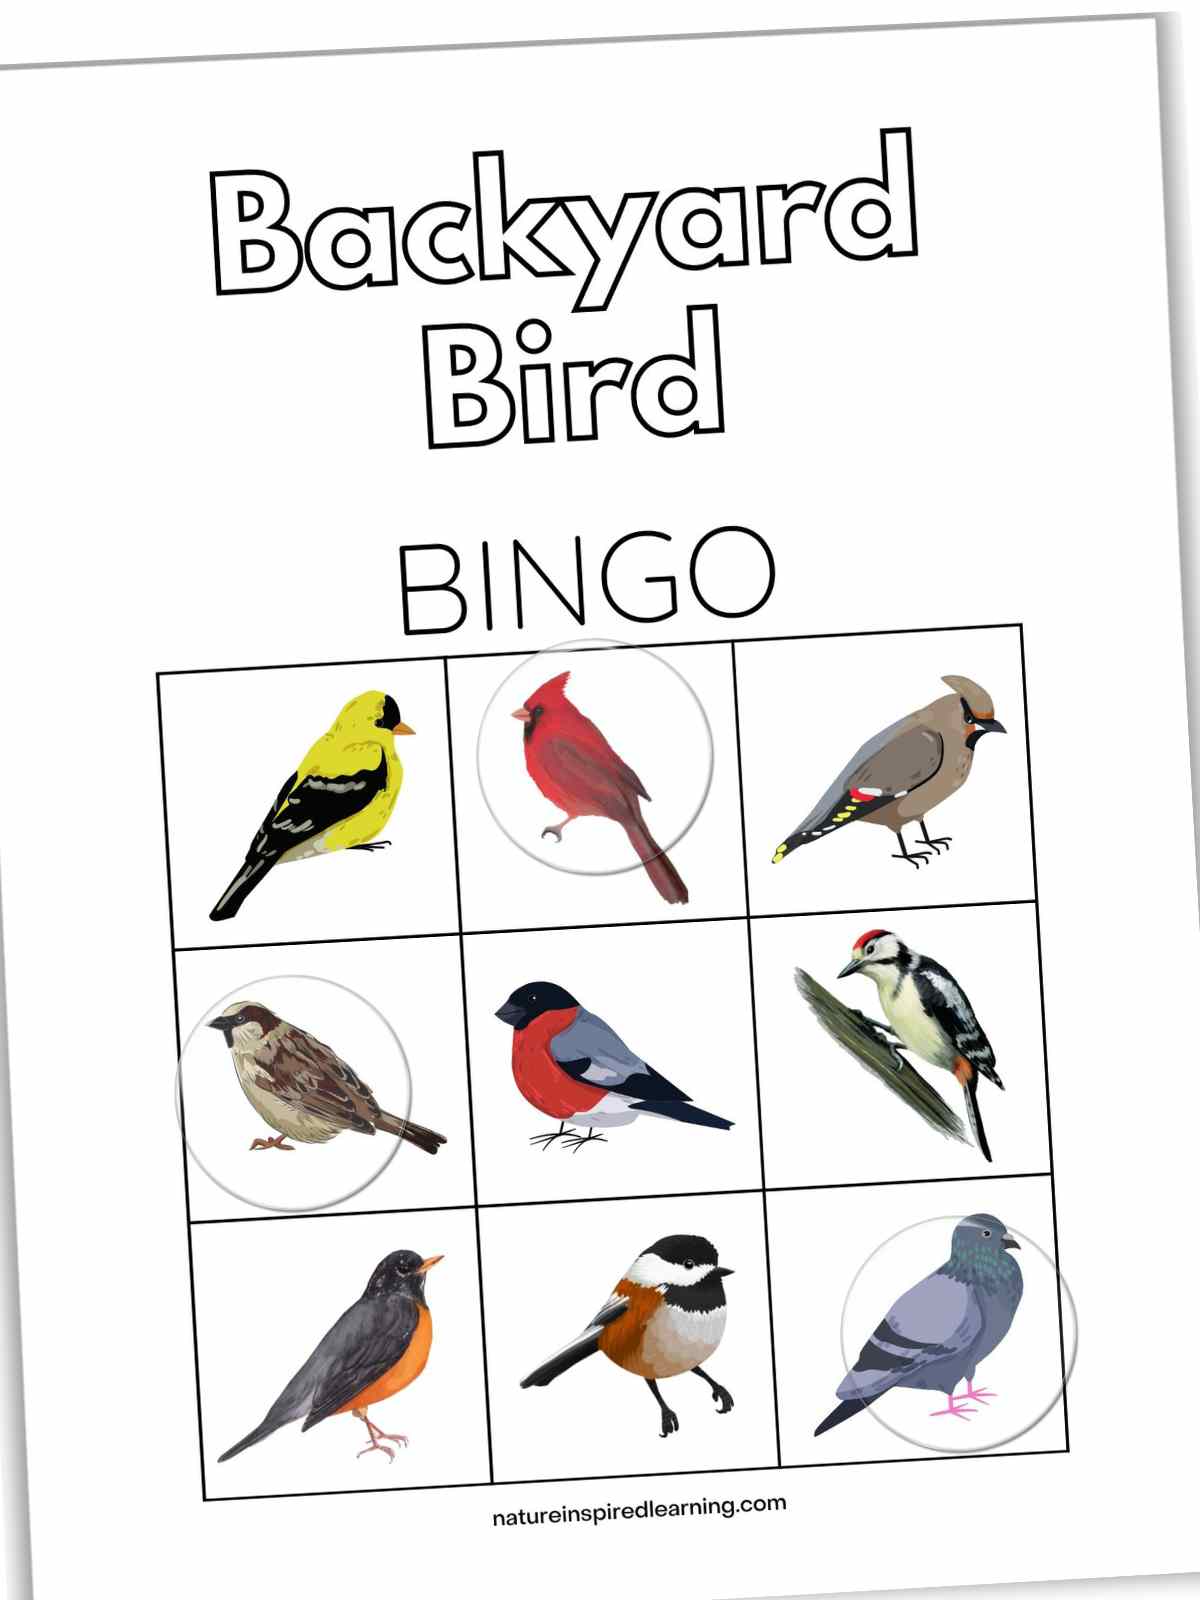 Printable backyard bird bingo card slanted with three clear plastic bingo chips on top of the colorful birds.